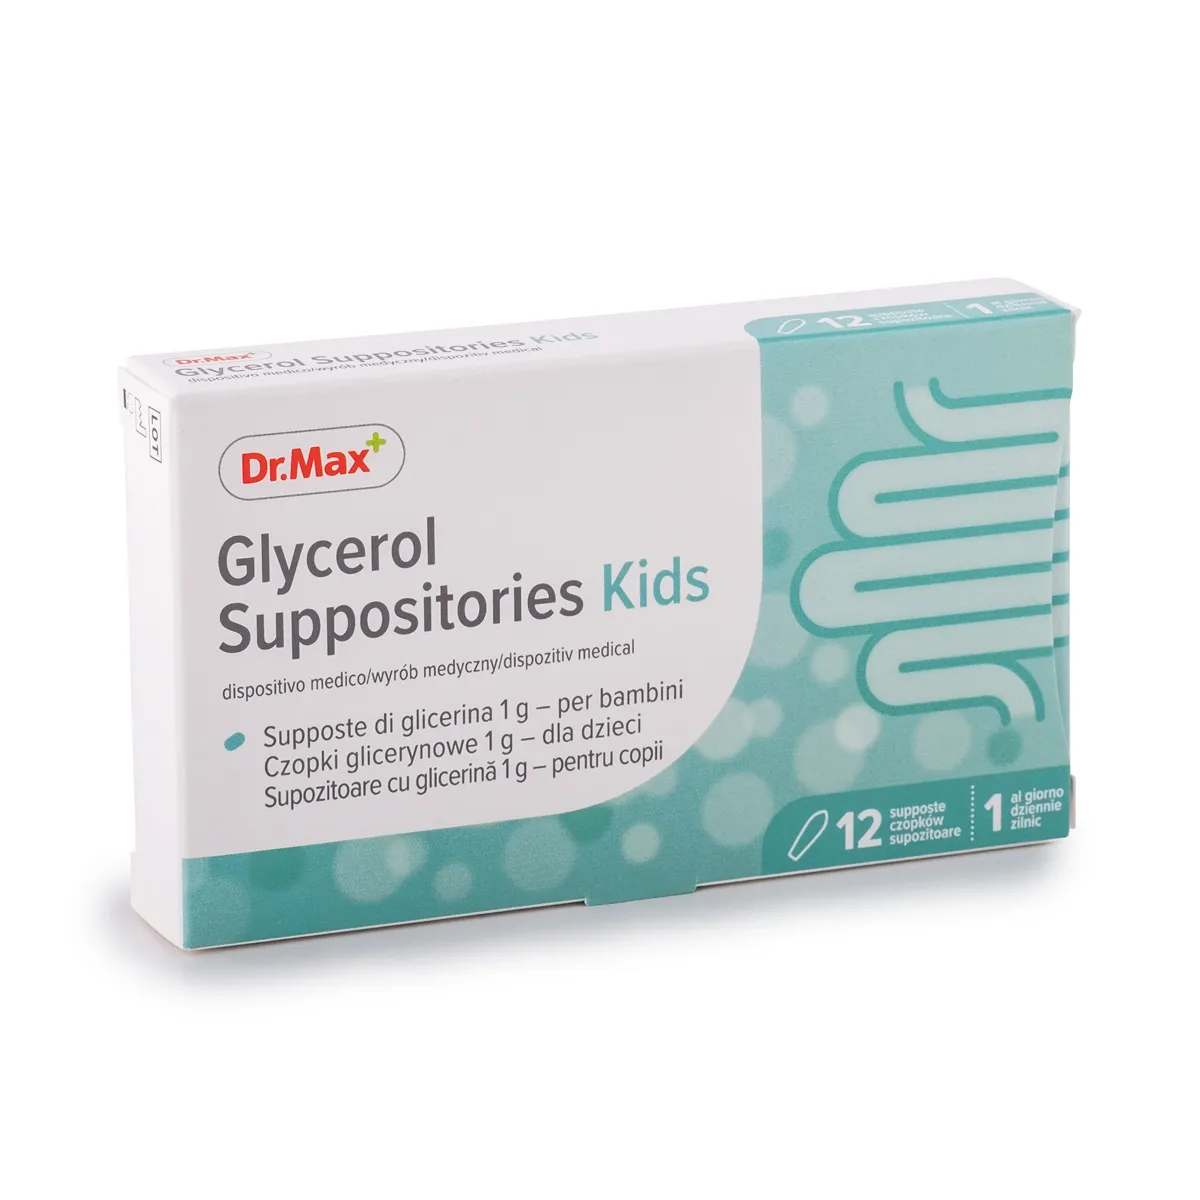 Dr.Max Glycerol Suppositories Kids 12 Supposte Stitichezza Occasionale Bambini